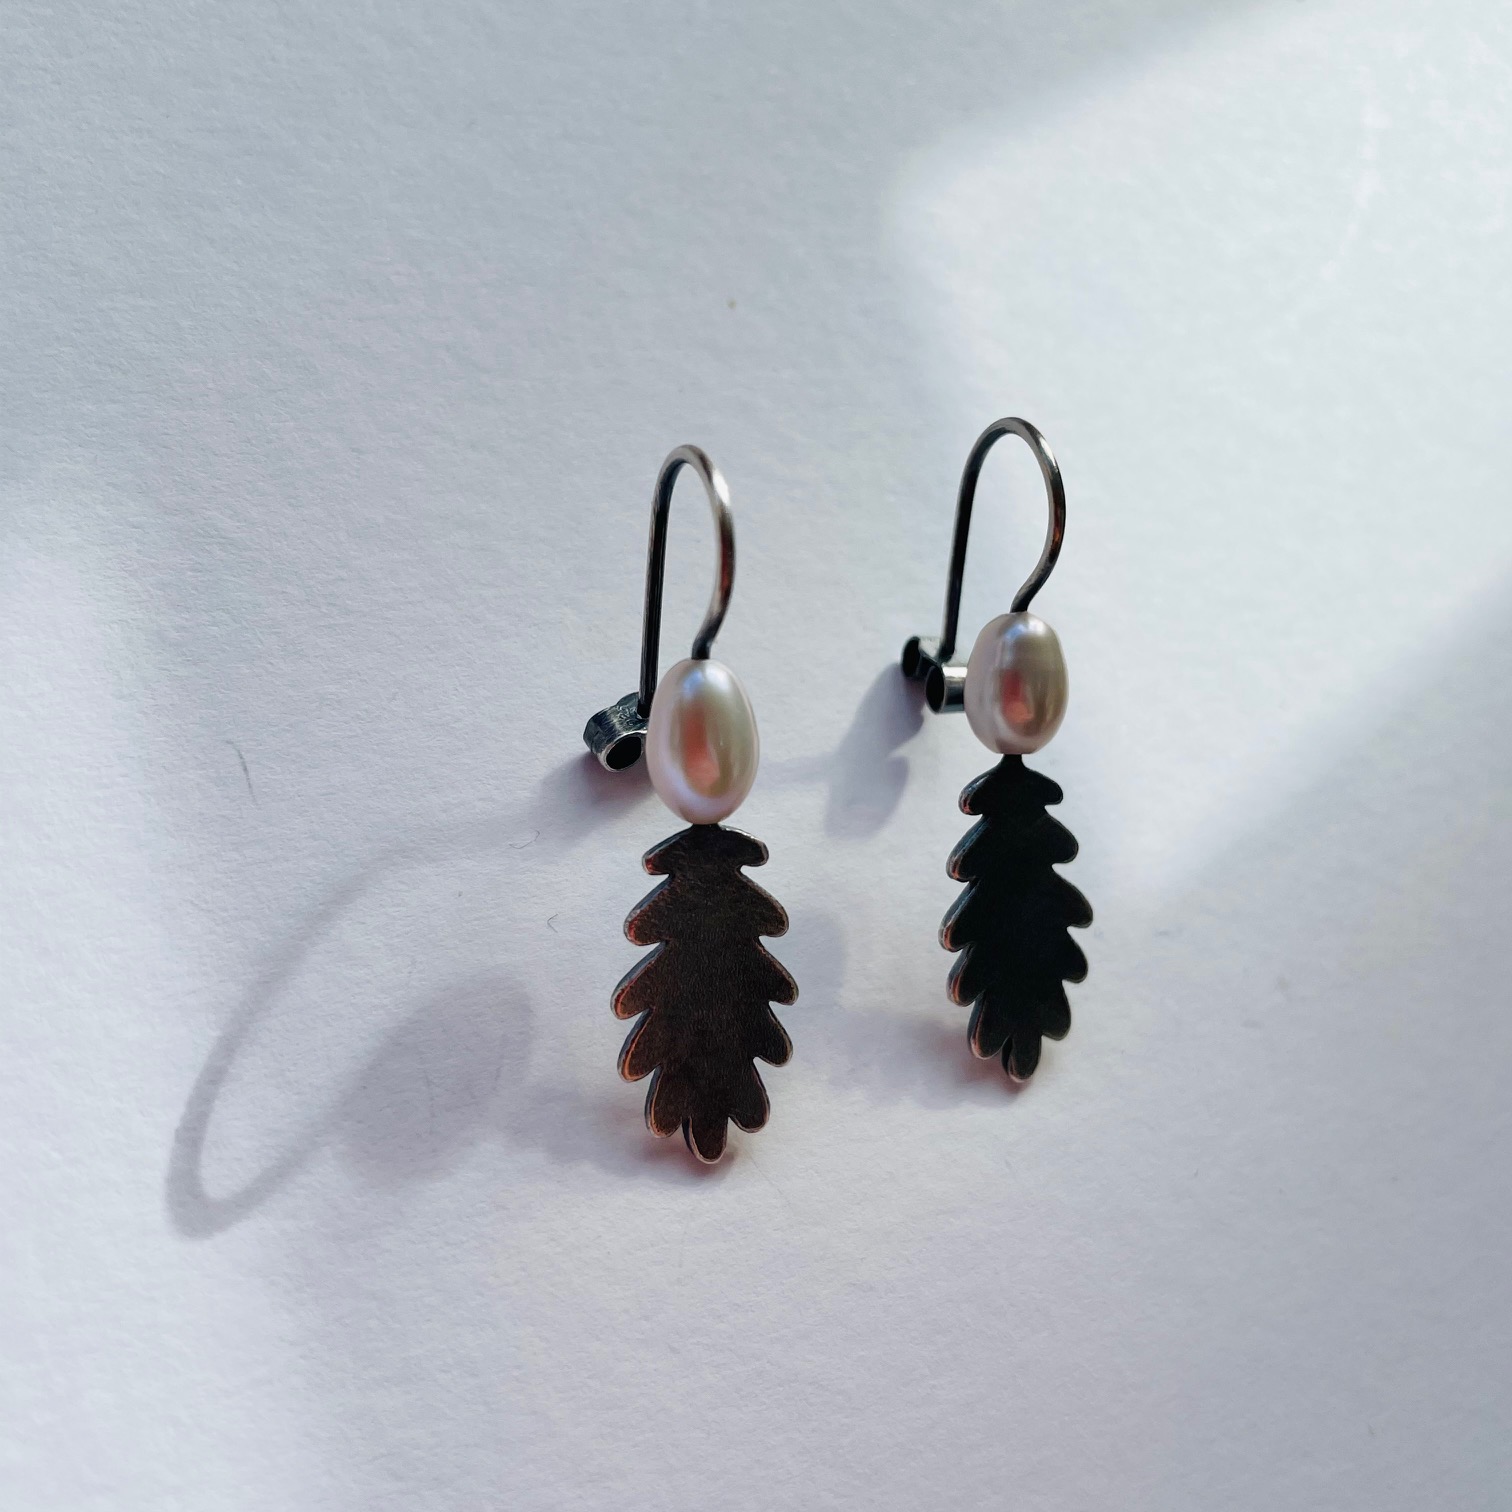 Oak leaf and pearl earrings by Suzanne Potter of Siskin Jewellery